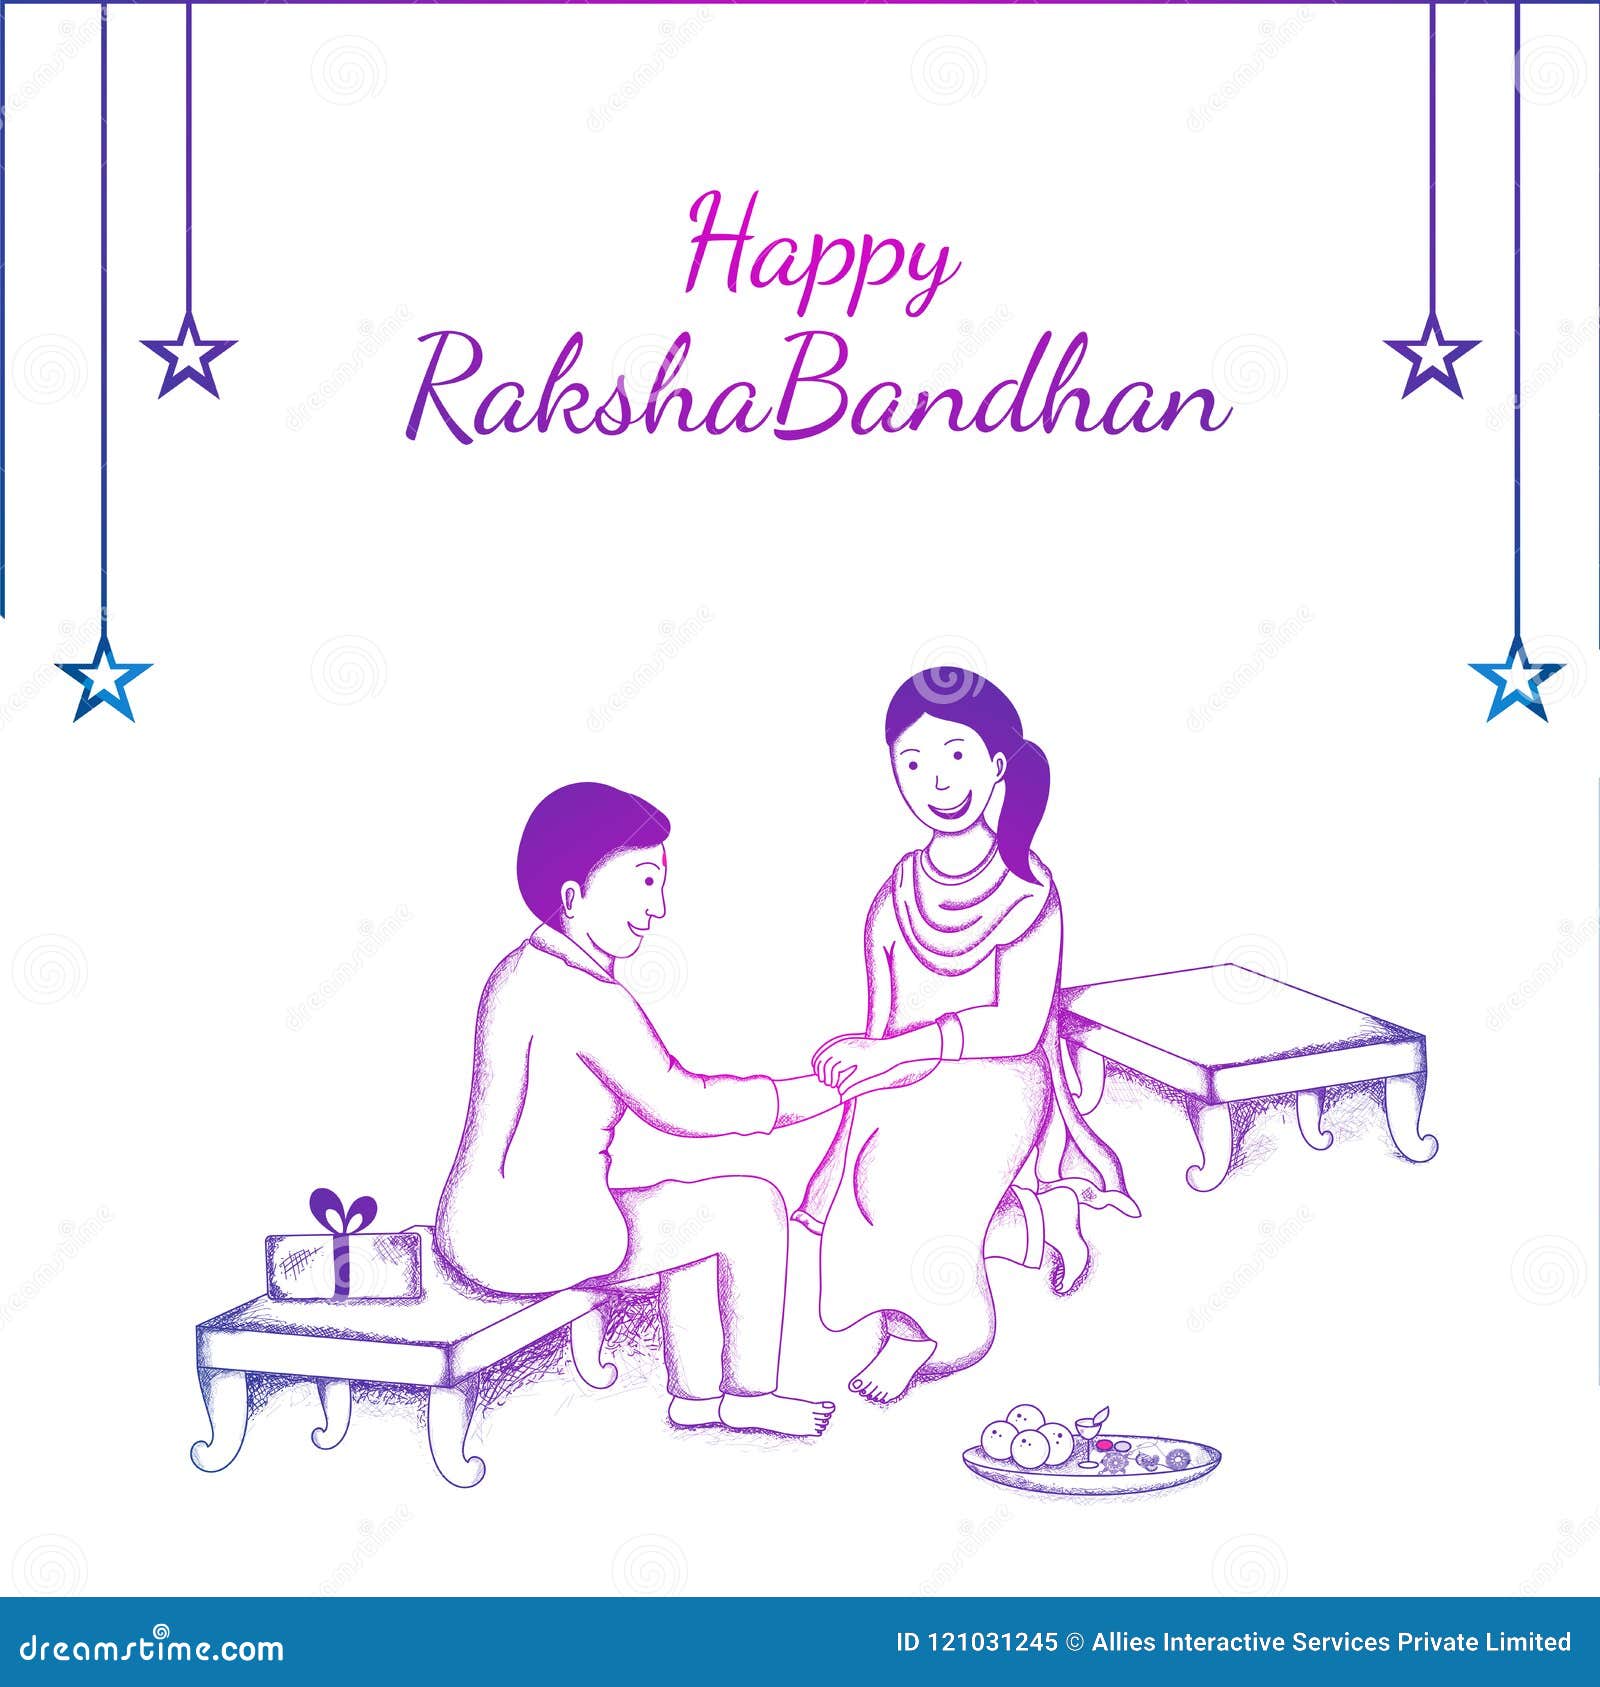 Sister Hard Binding Raksha Bandhan Thread Stock Vector (Royalty Free)  2347109731 | Shutterstock